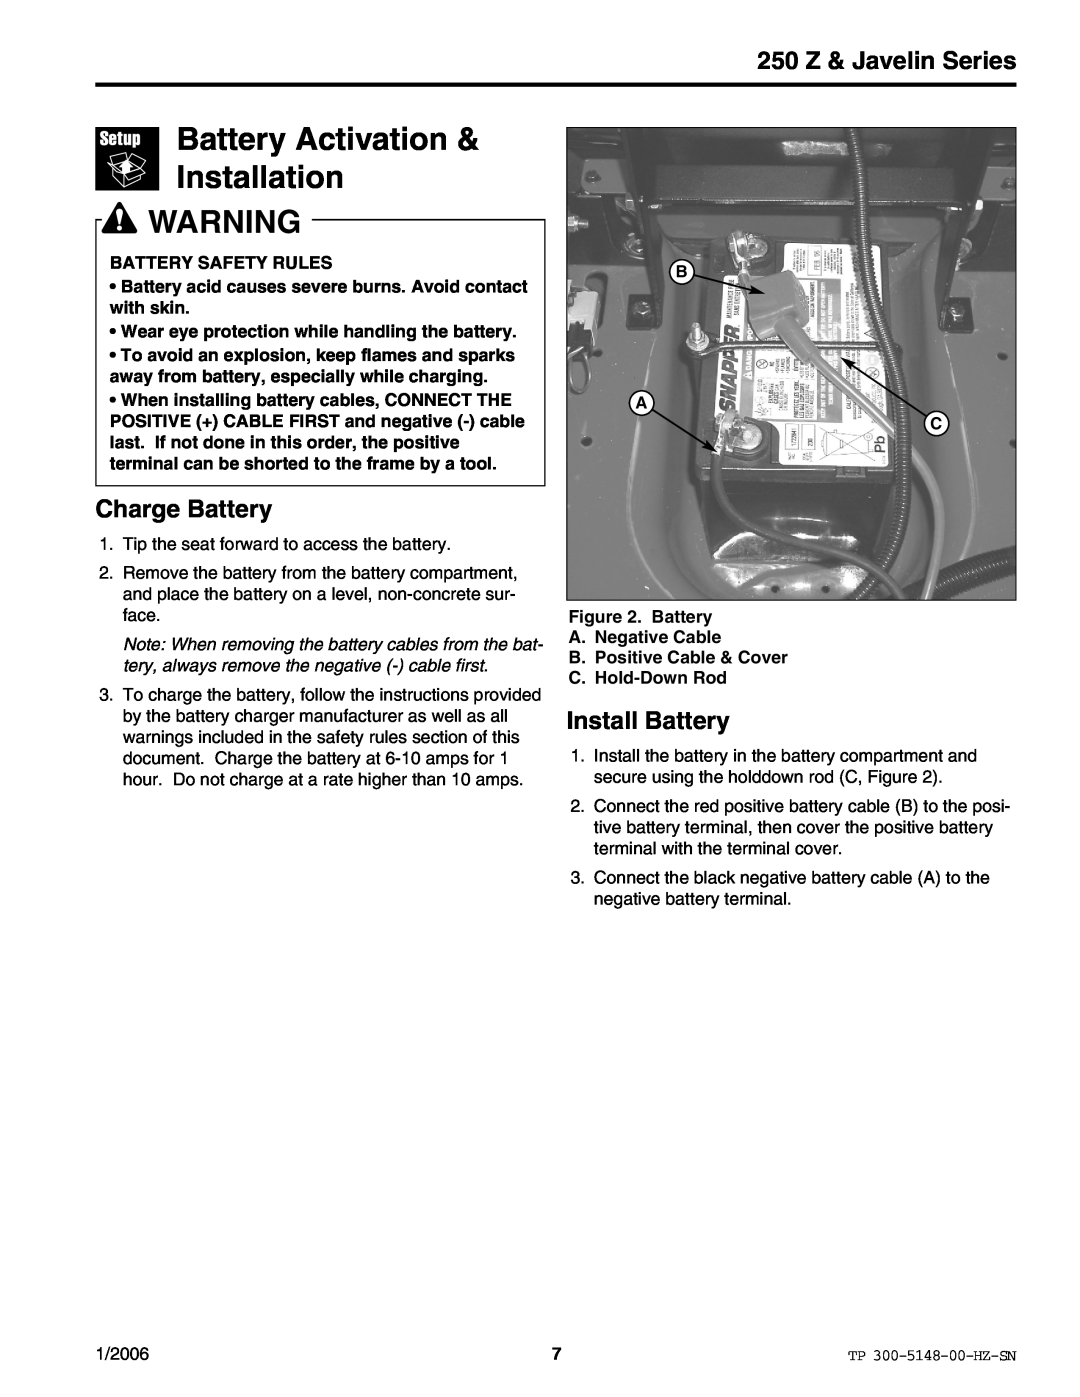 Snapper ERZT185440BVE manual Battery Activation Installation, Charge Battery, Install Battery, 250 Z & Javelin Series 